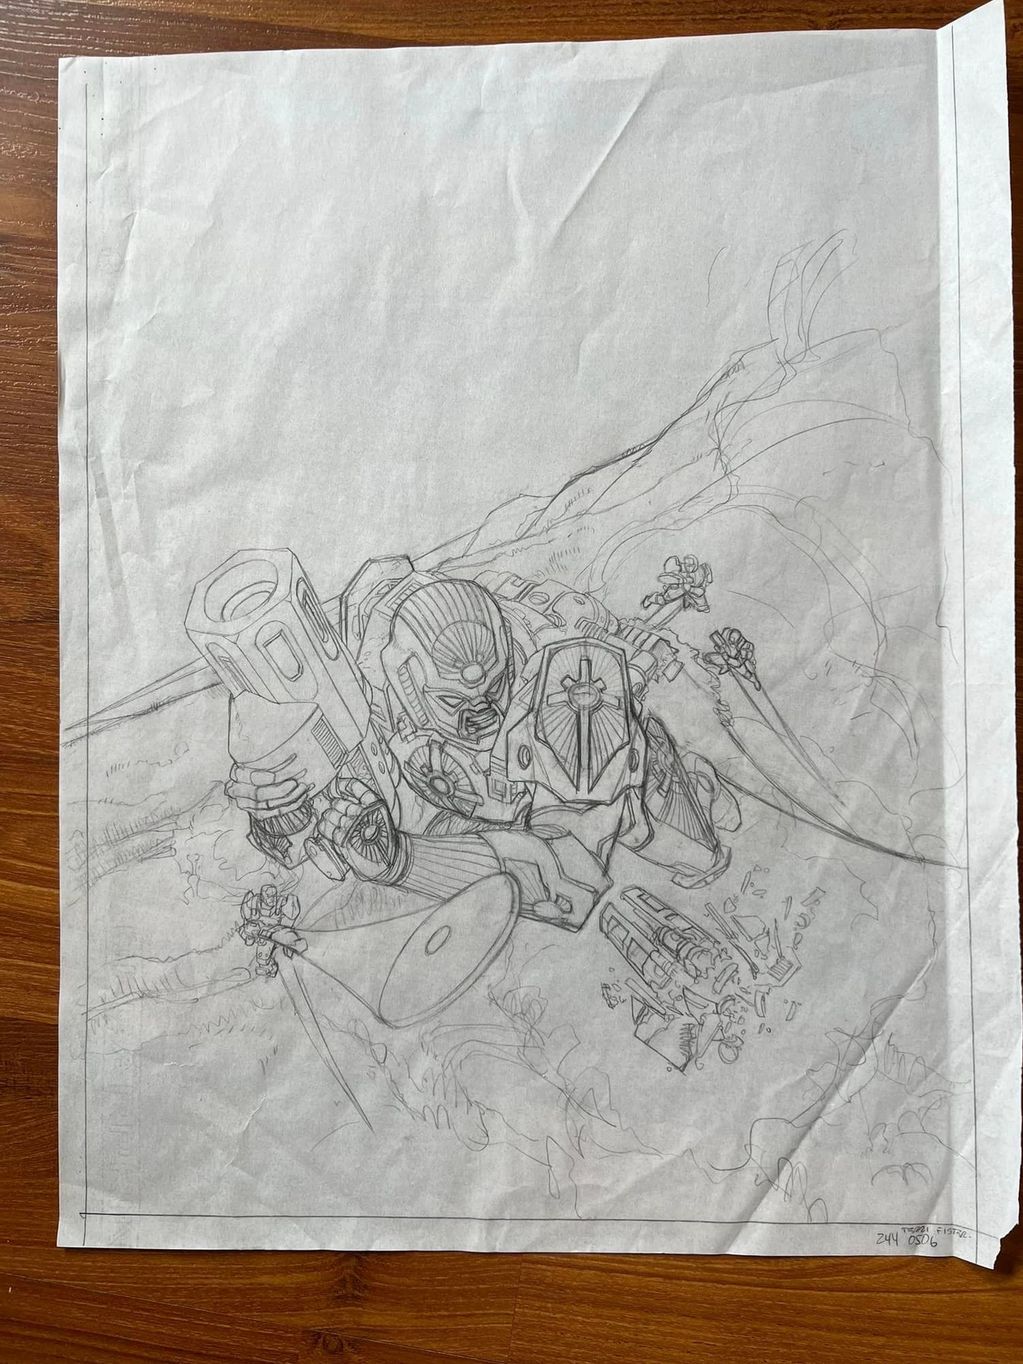 Tribes Aerial assault front cover original sketch. 